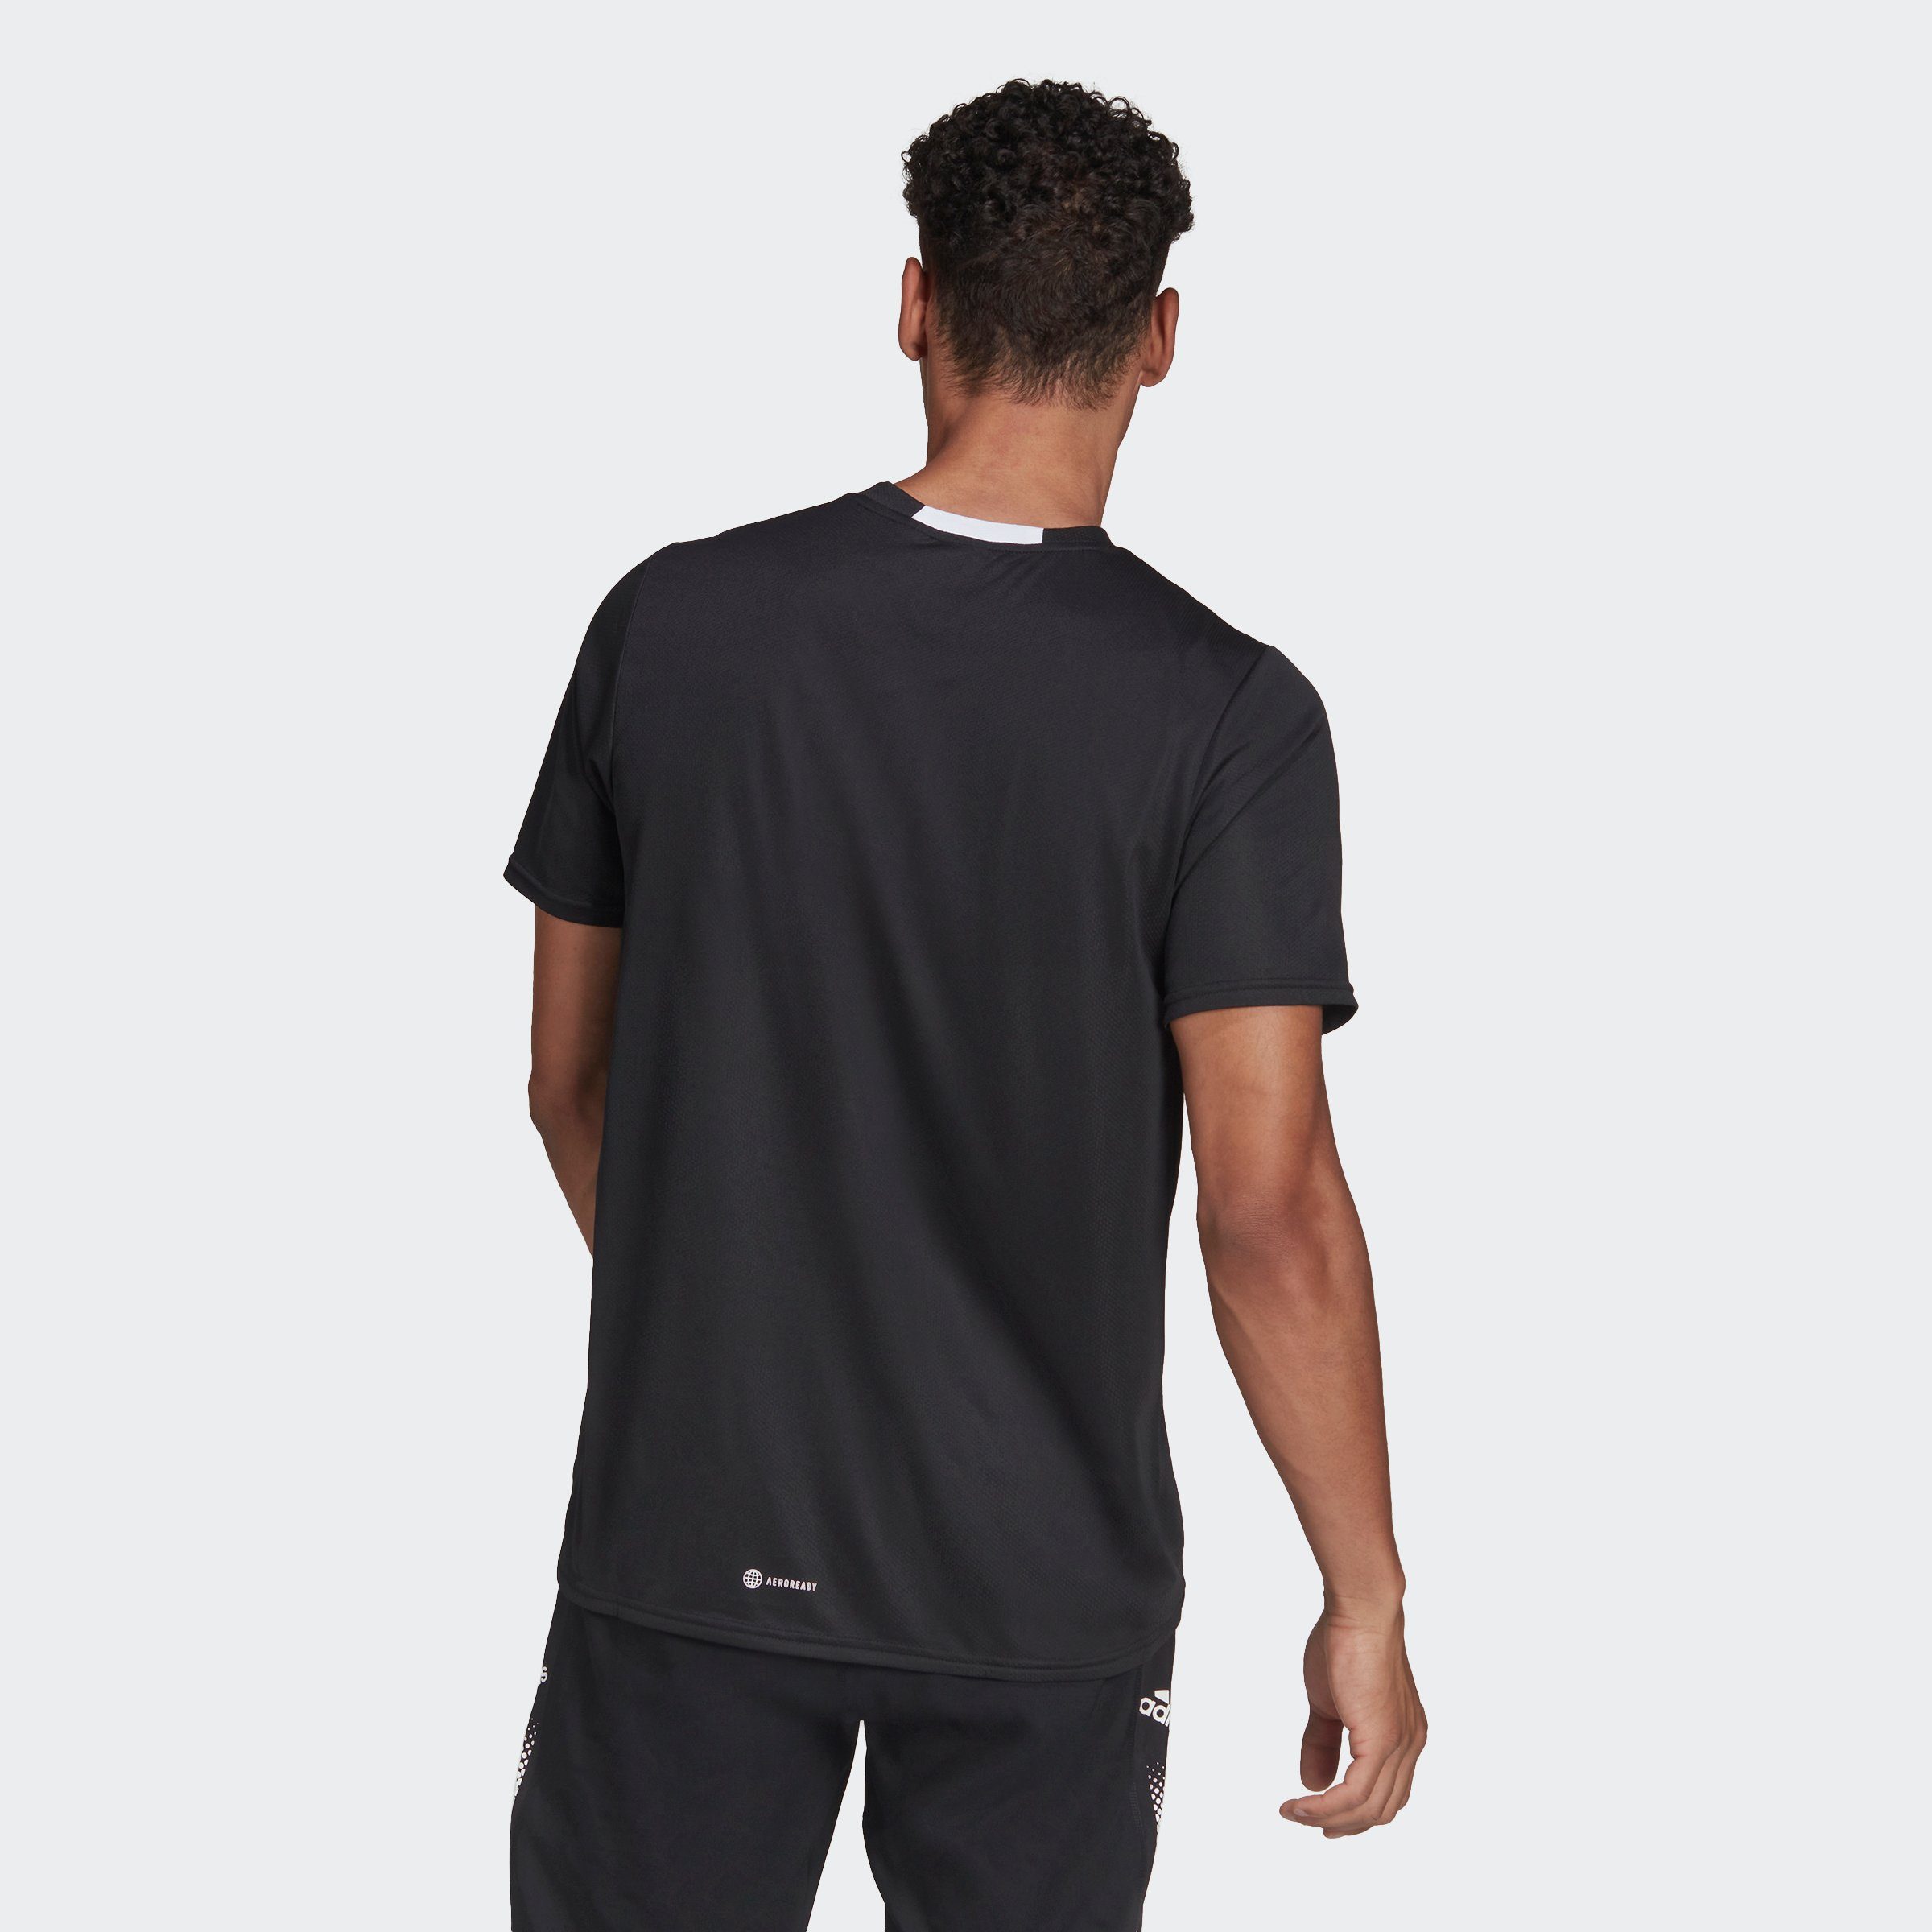 T-Shirt FOR Performance adidas DESIGNED MOVEMENT AEROREADY Black